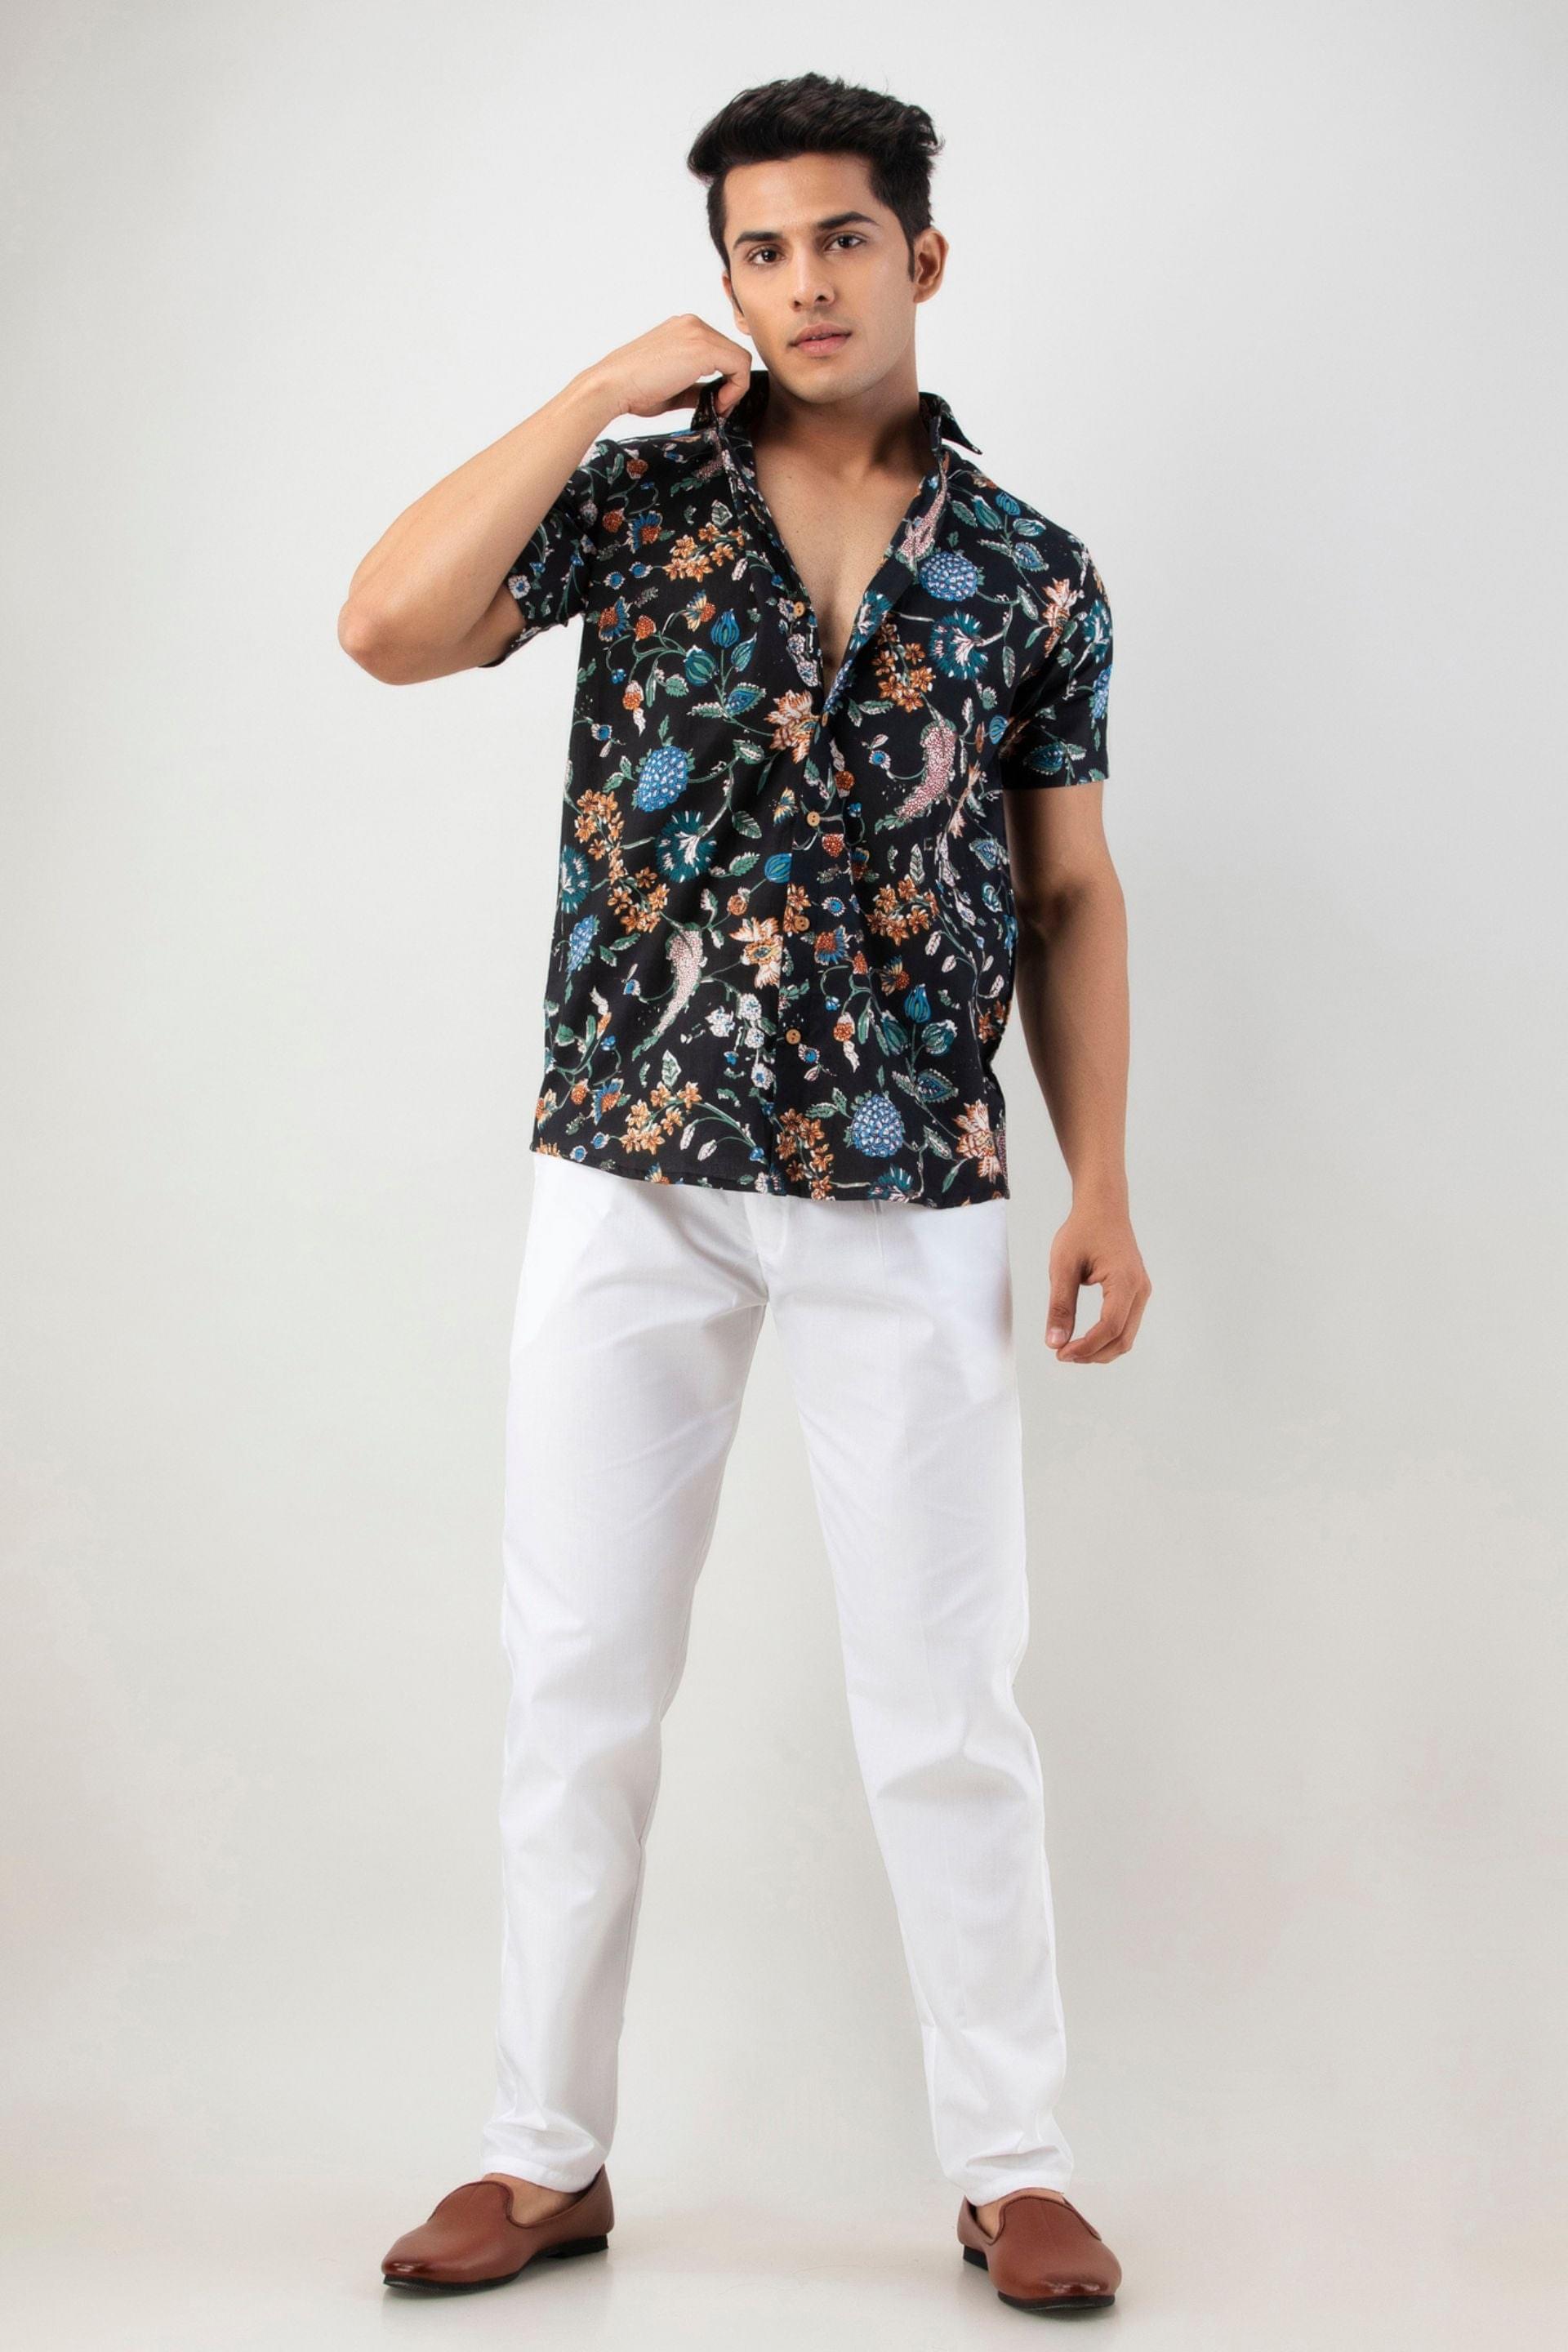 Firangi Yarn Black Chintz Art Printed Cotton Floral Shirt For Men - Half Sleeves, White